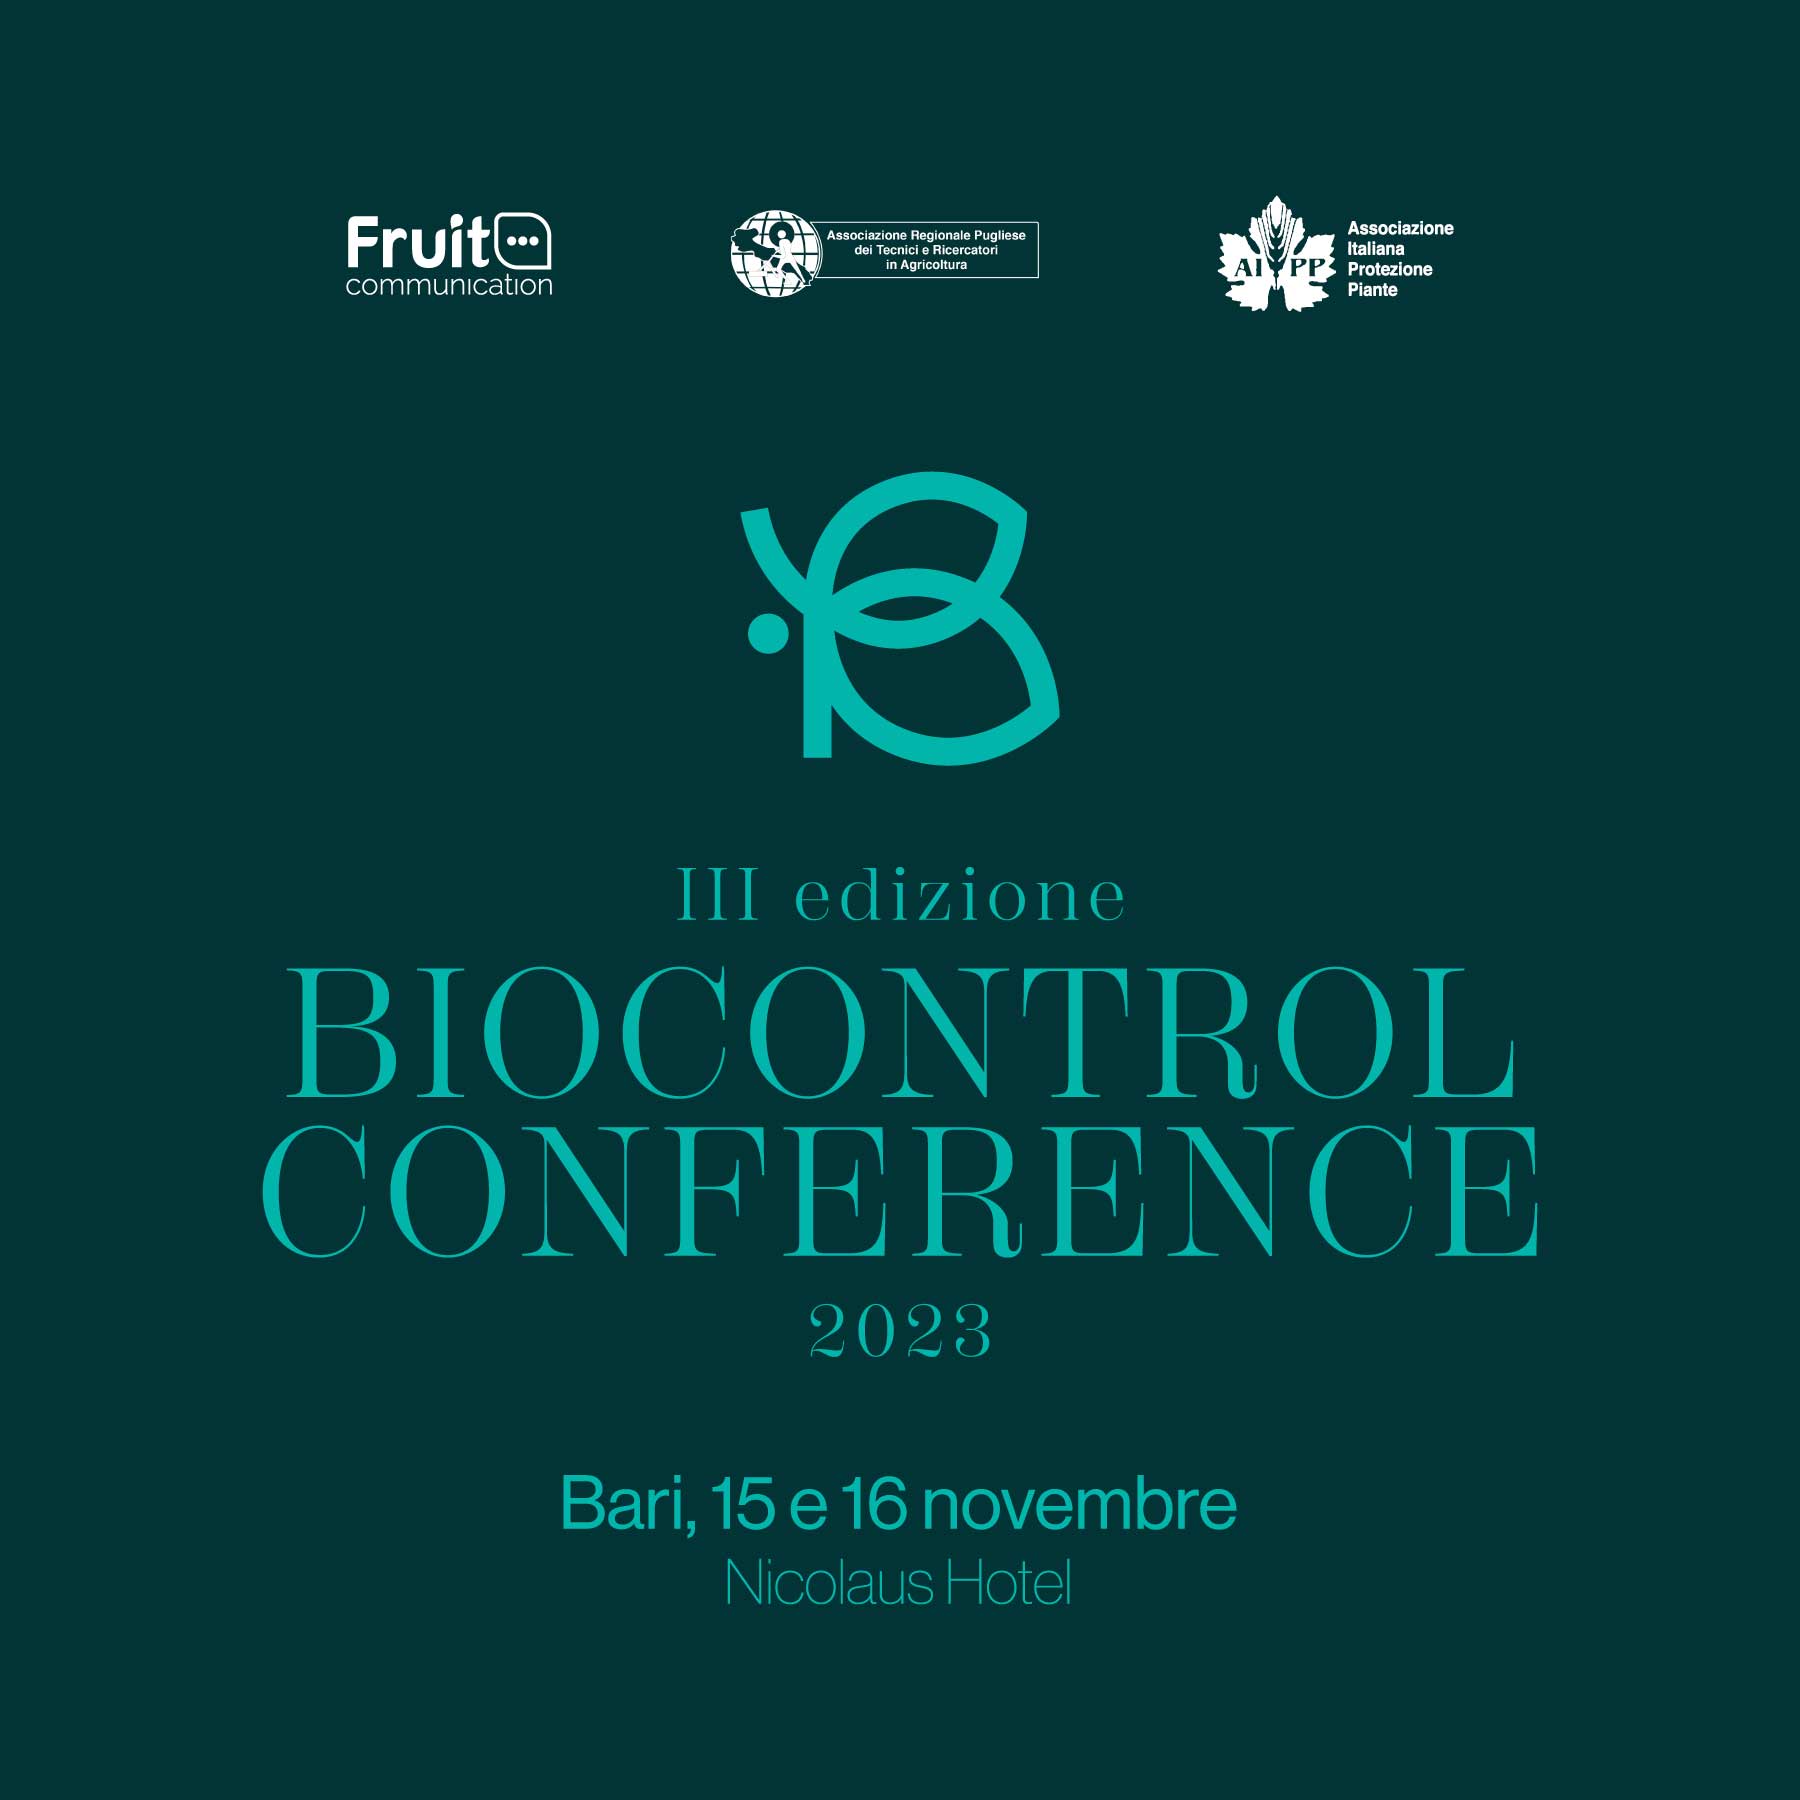 Biocontrol Conference 2023